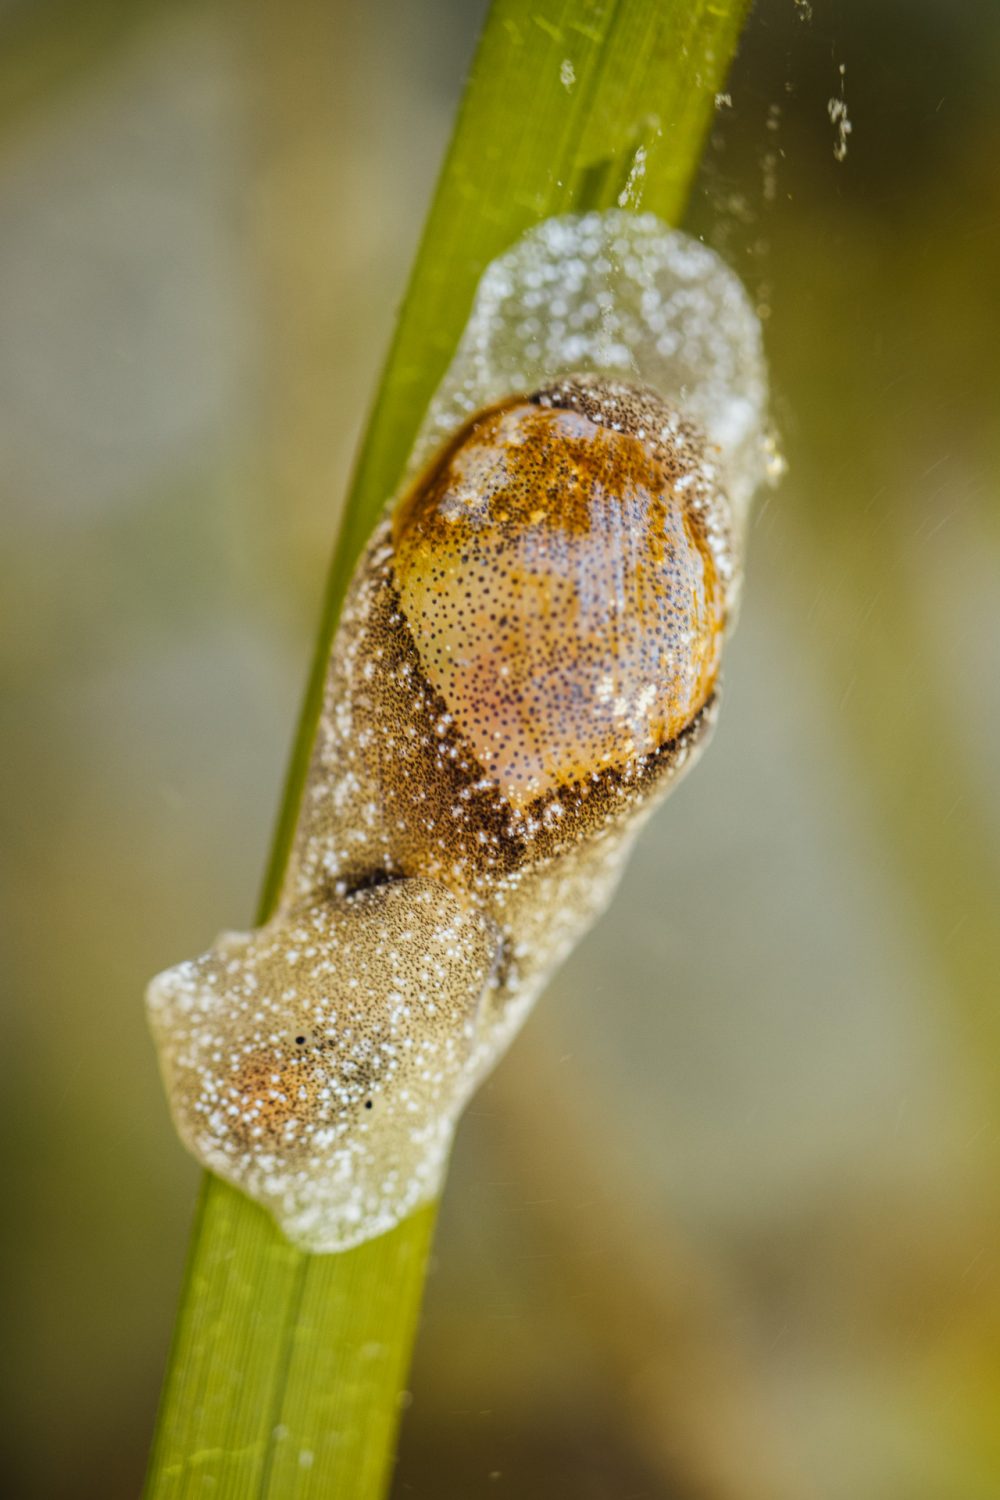 Blister Glassy-Bubble Snail (Haminoea vesicula) on eelgrass.